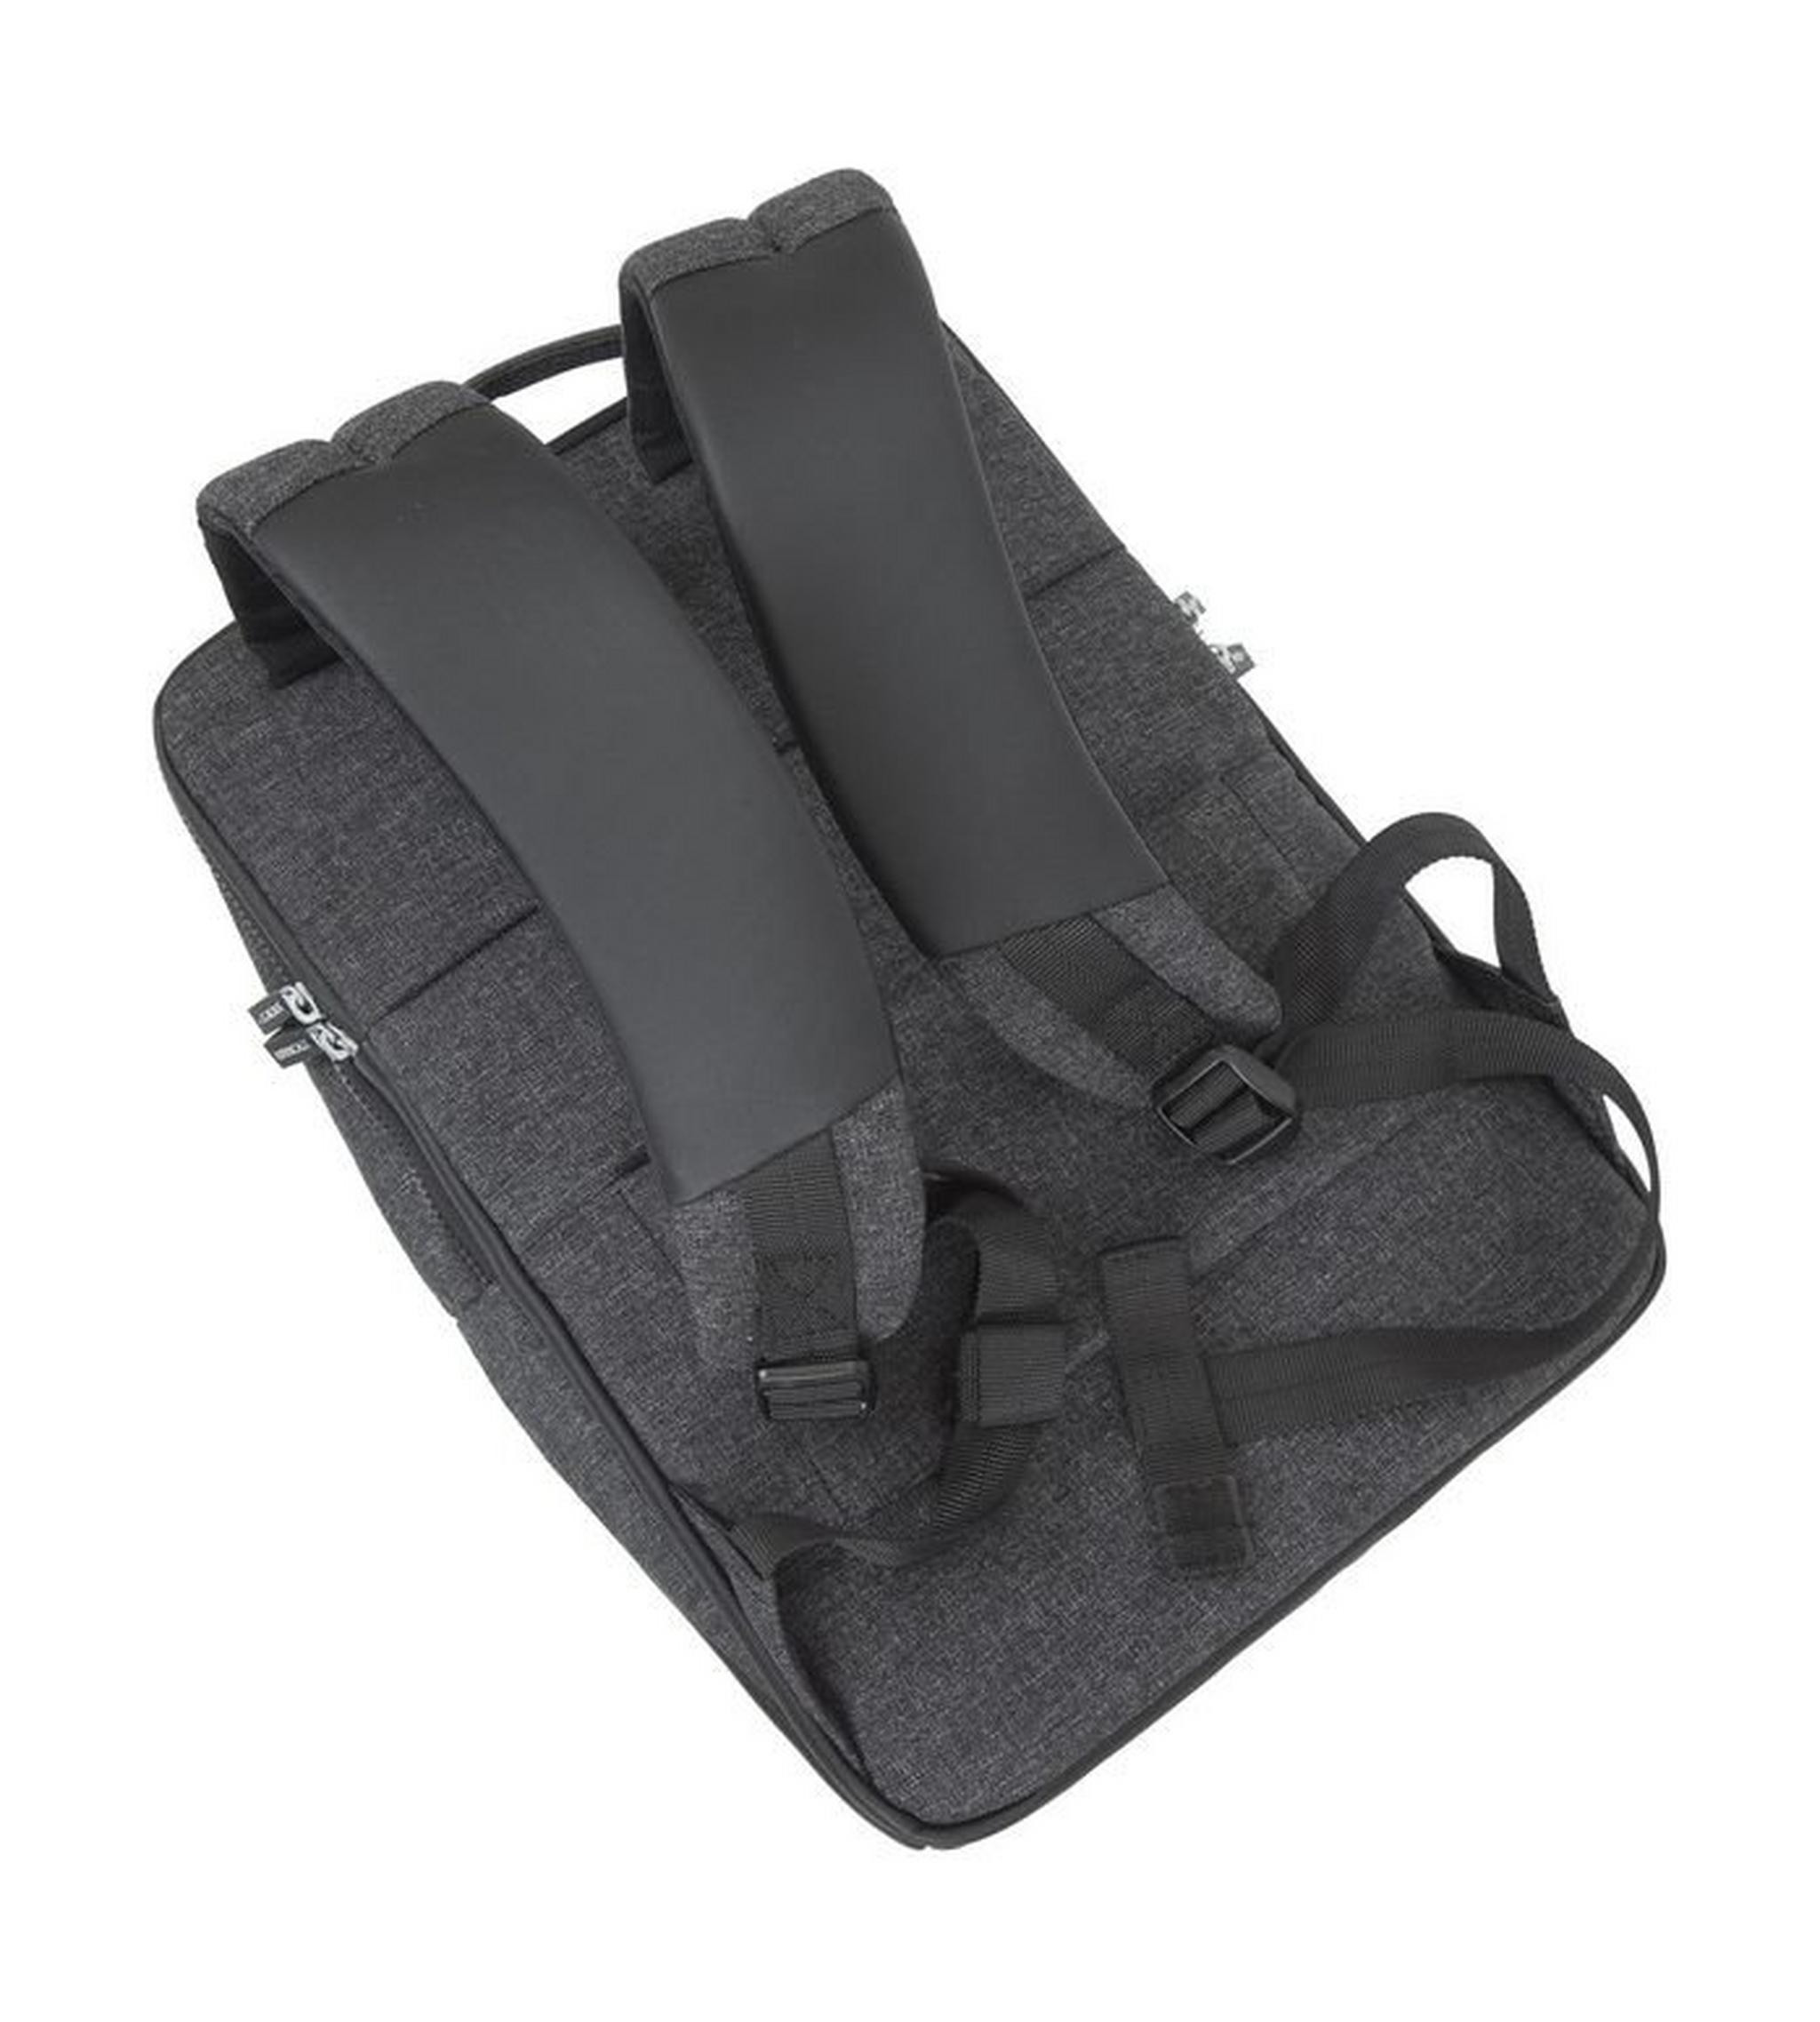 Riva Melange MacBook Pro and Ultrabook Backpack 15.6 inch - Black